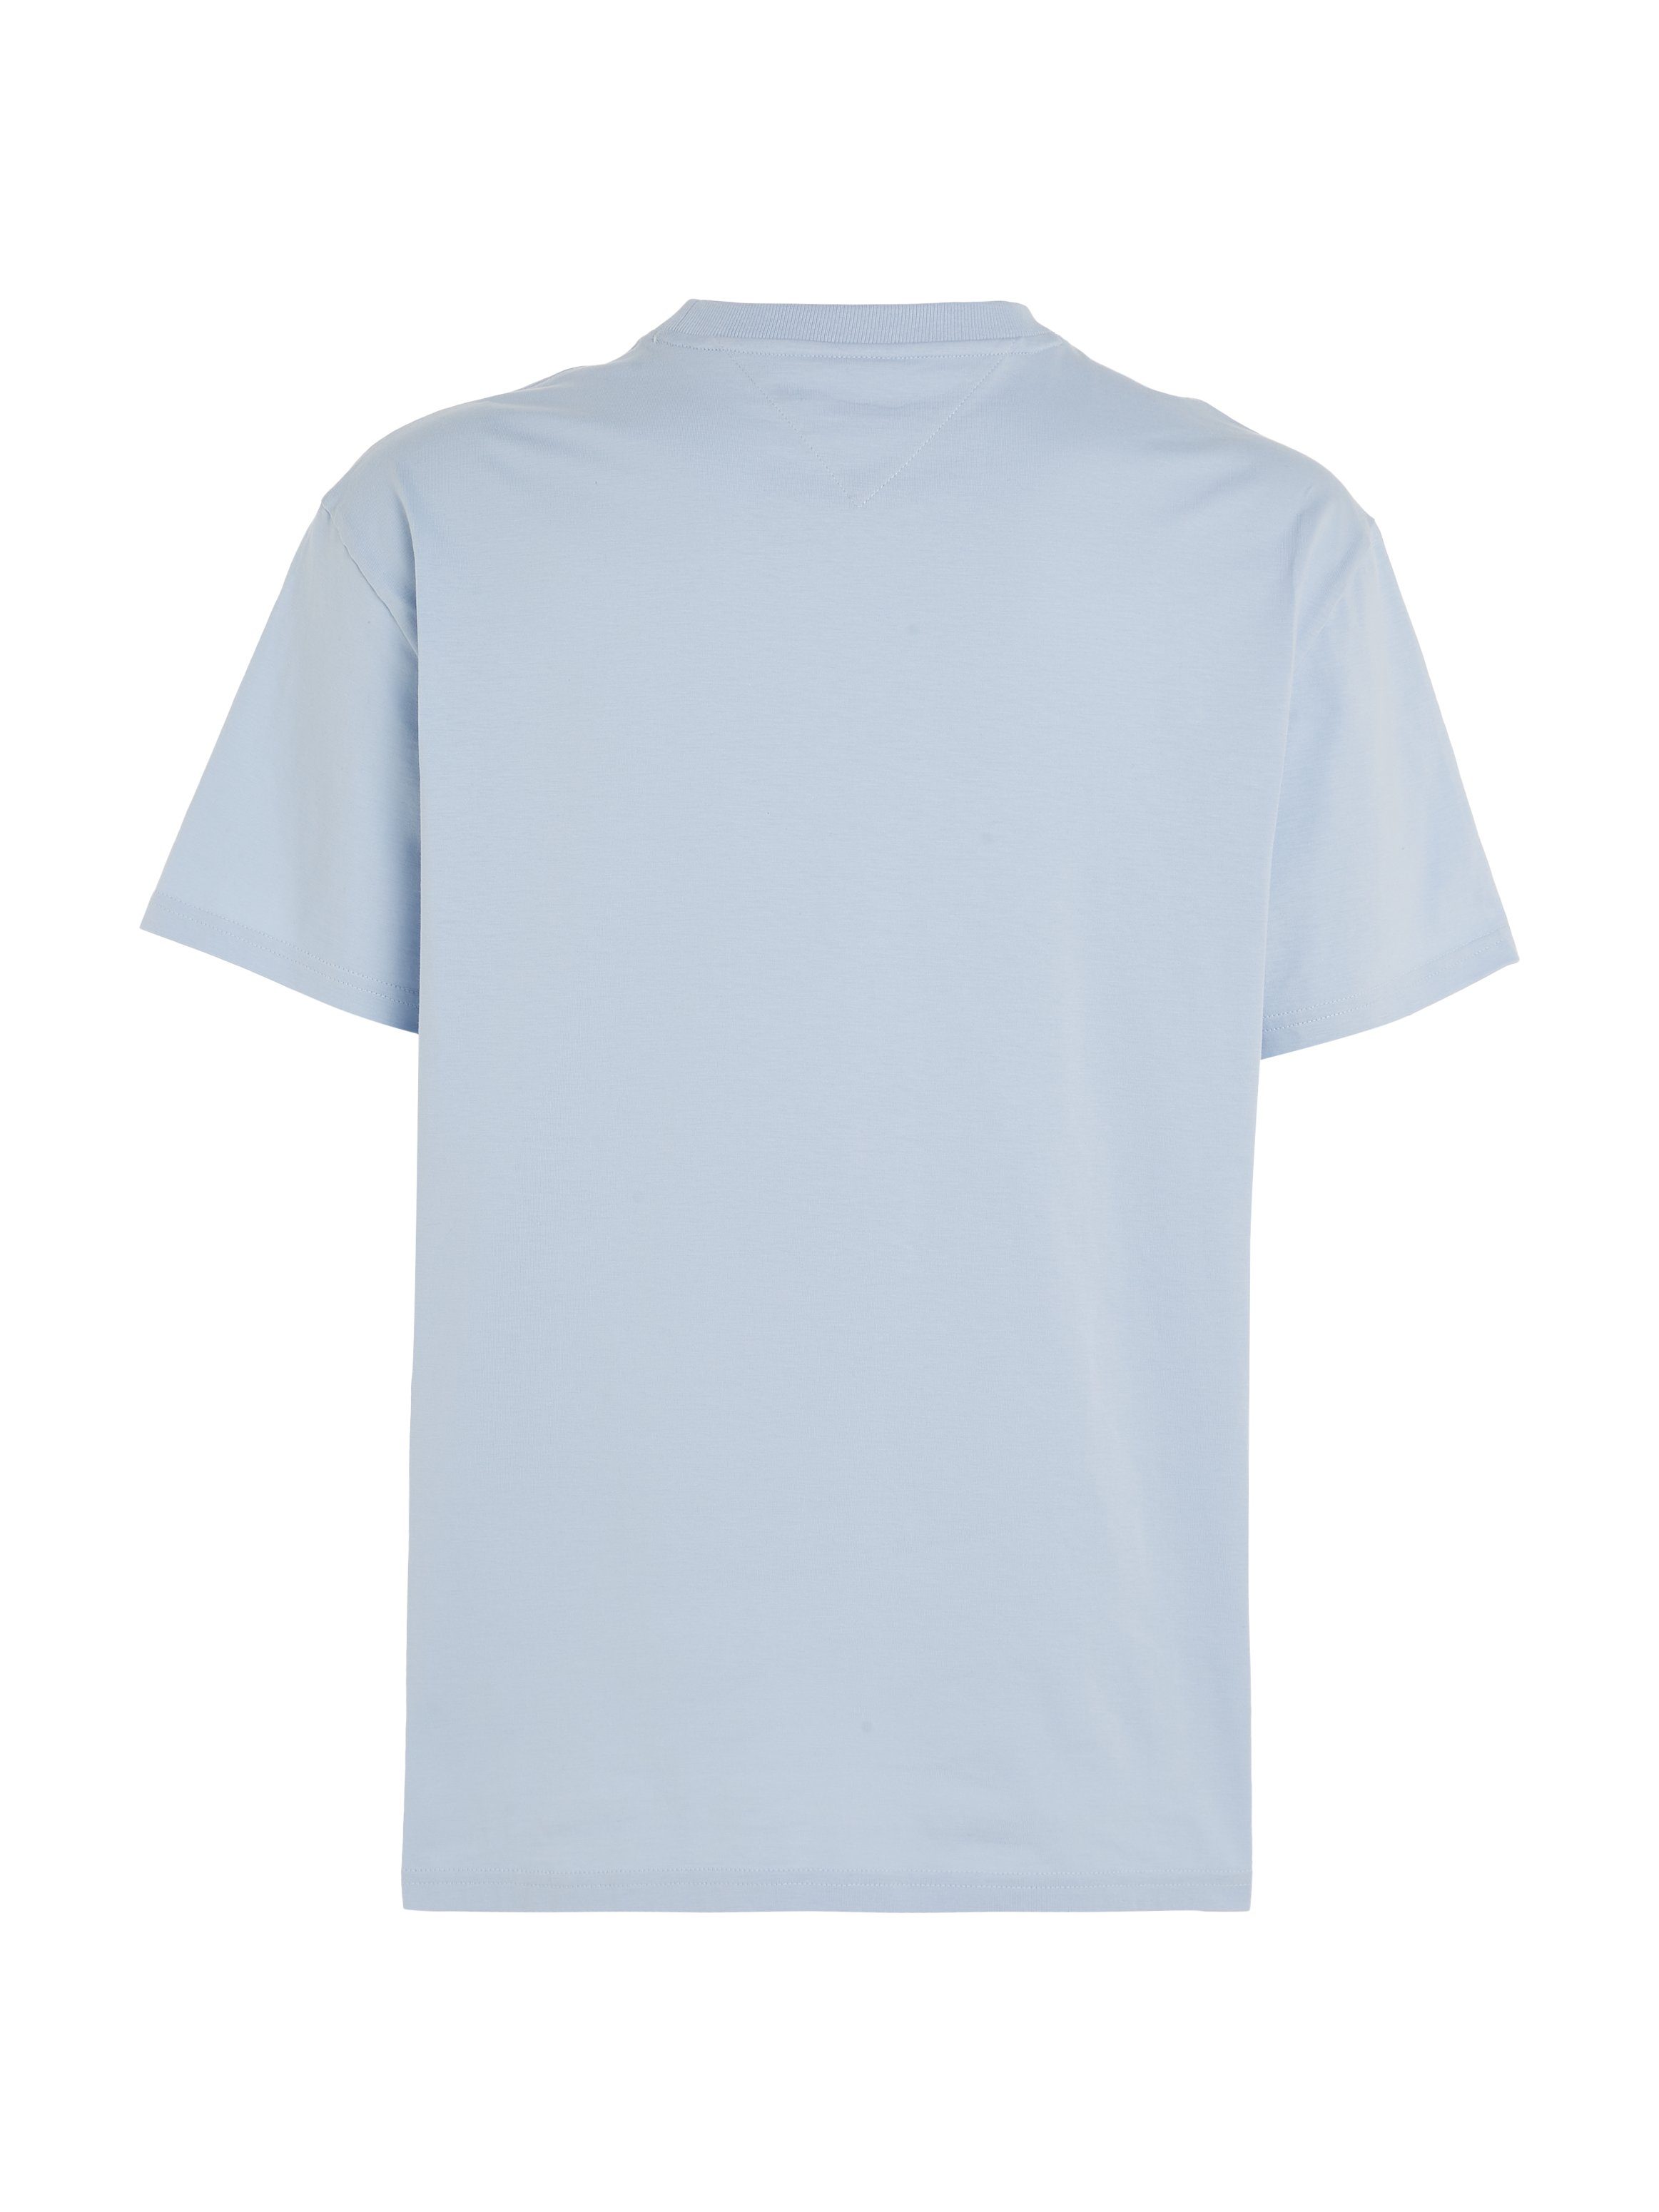 Tommy Jeans T-Shirt TJM JERSEY NECK breezy CLASSIC Logostickerei C mit blue